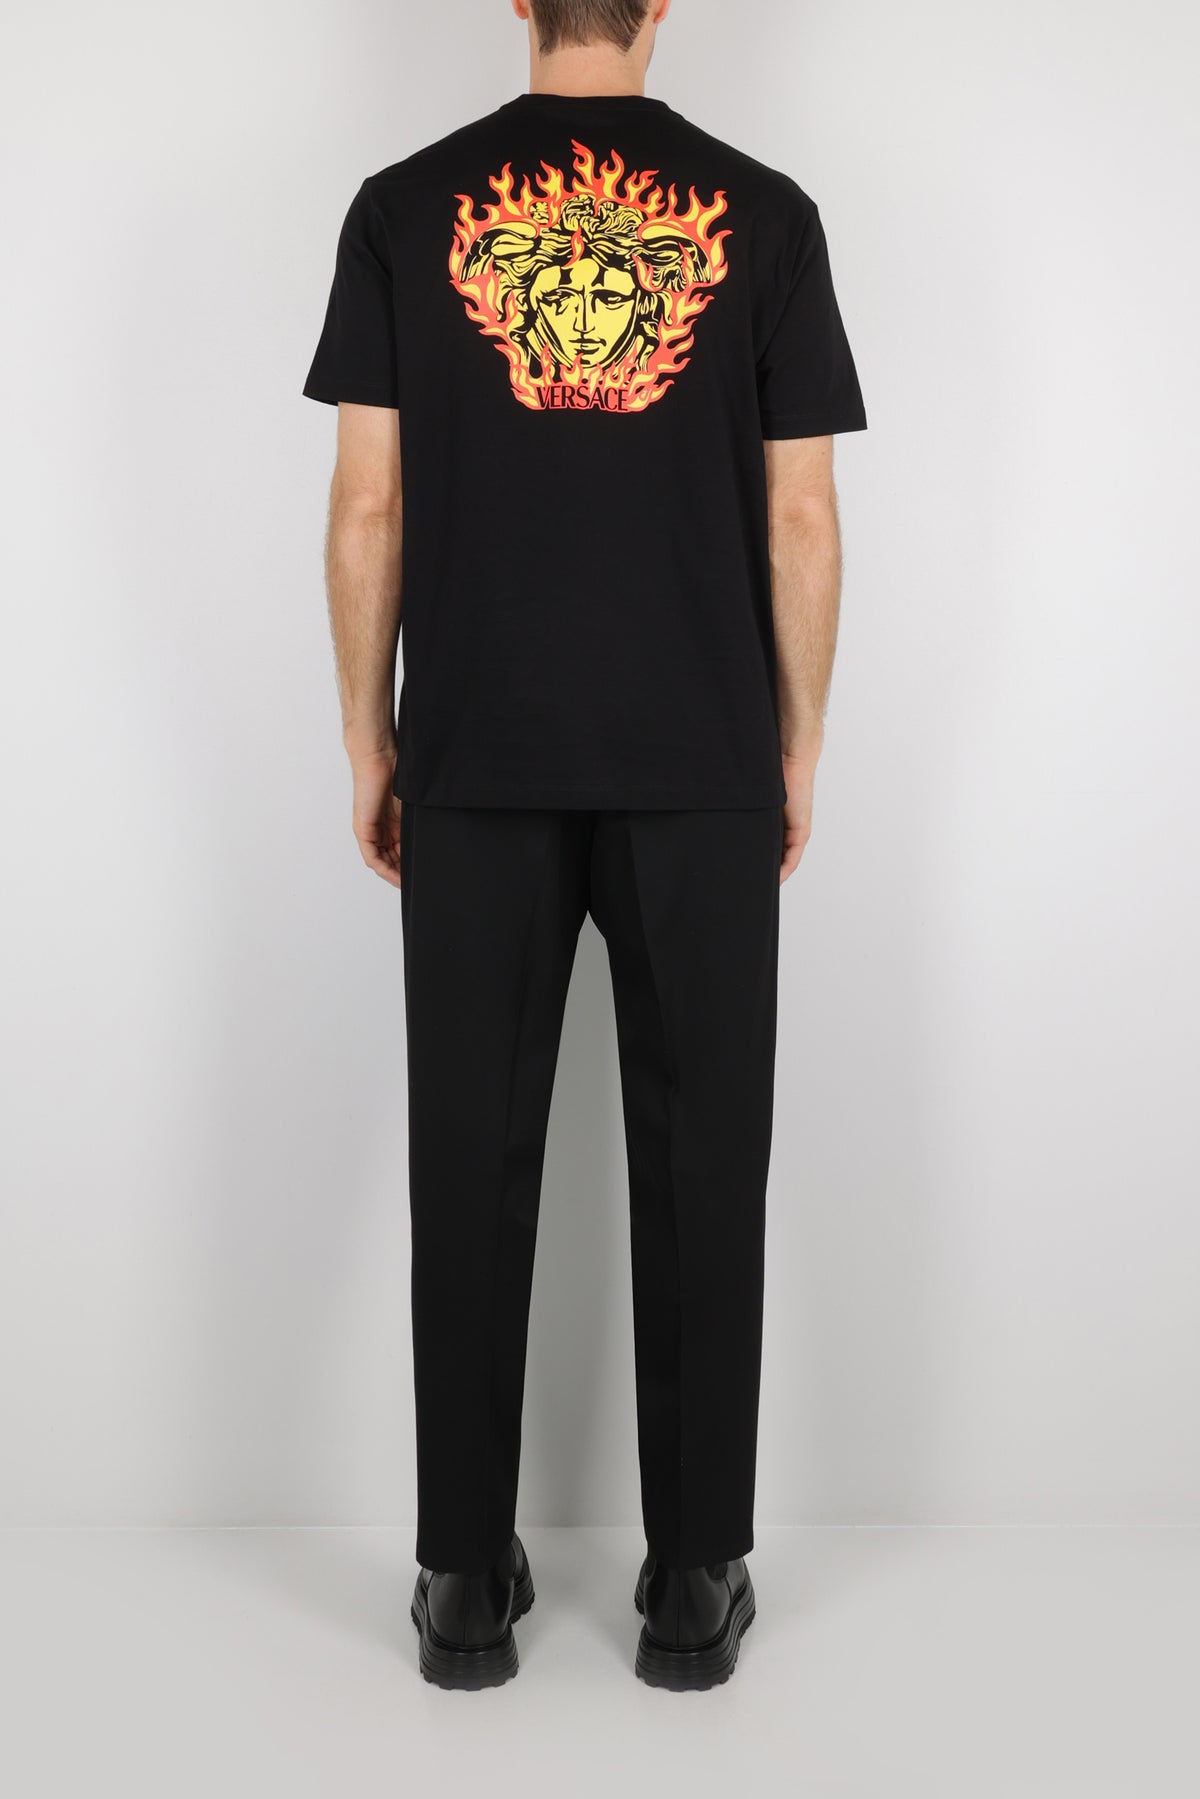 Versace Black Medusa Flame Print T-Shirt